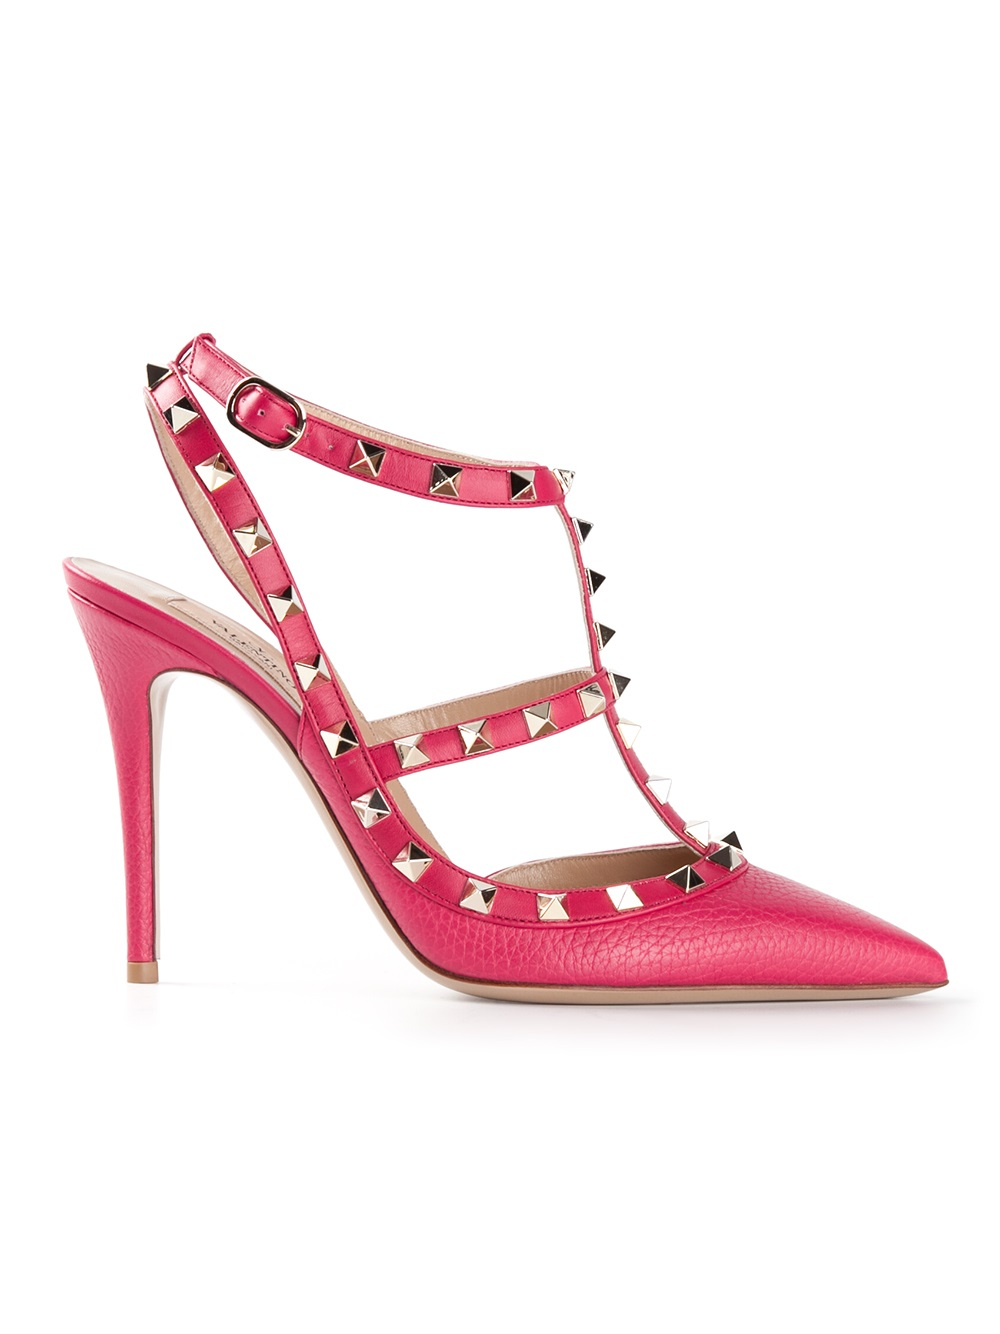 Lyst - Valentino Rockstud Pumps in Pink